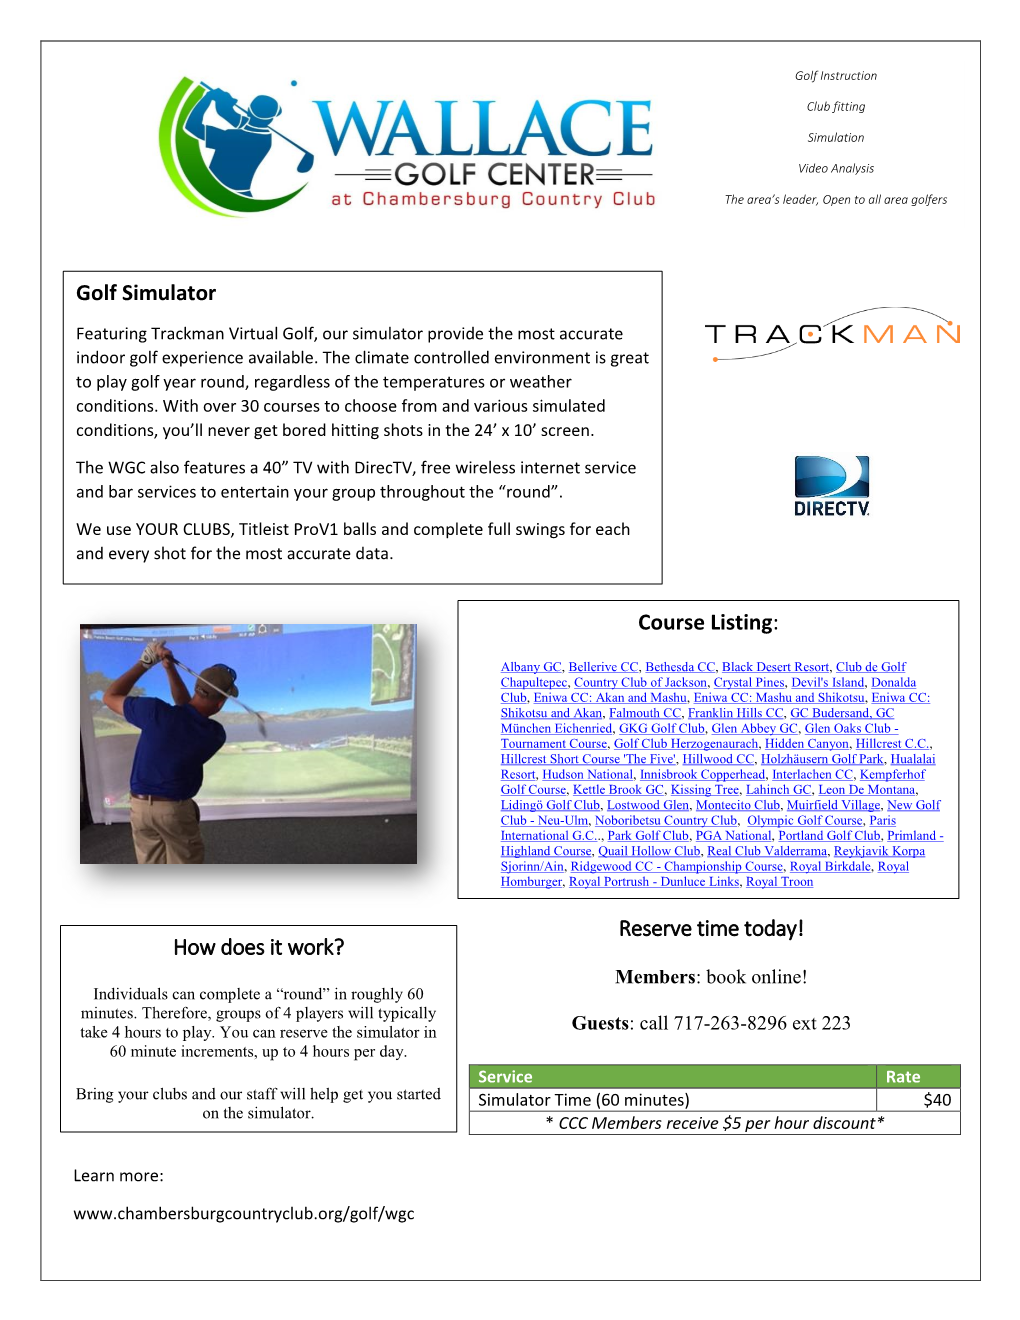 Golf Simulator Course Listing